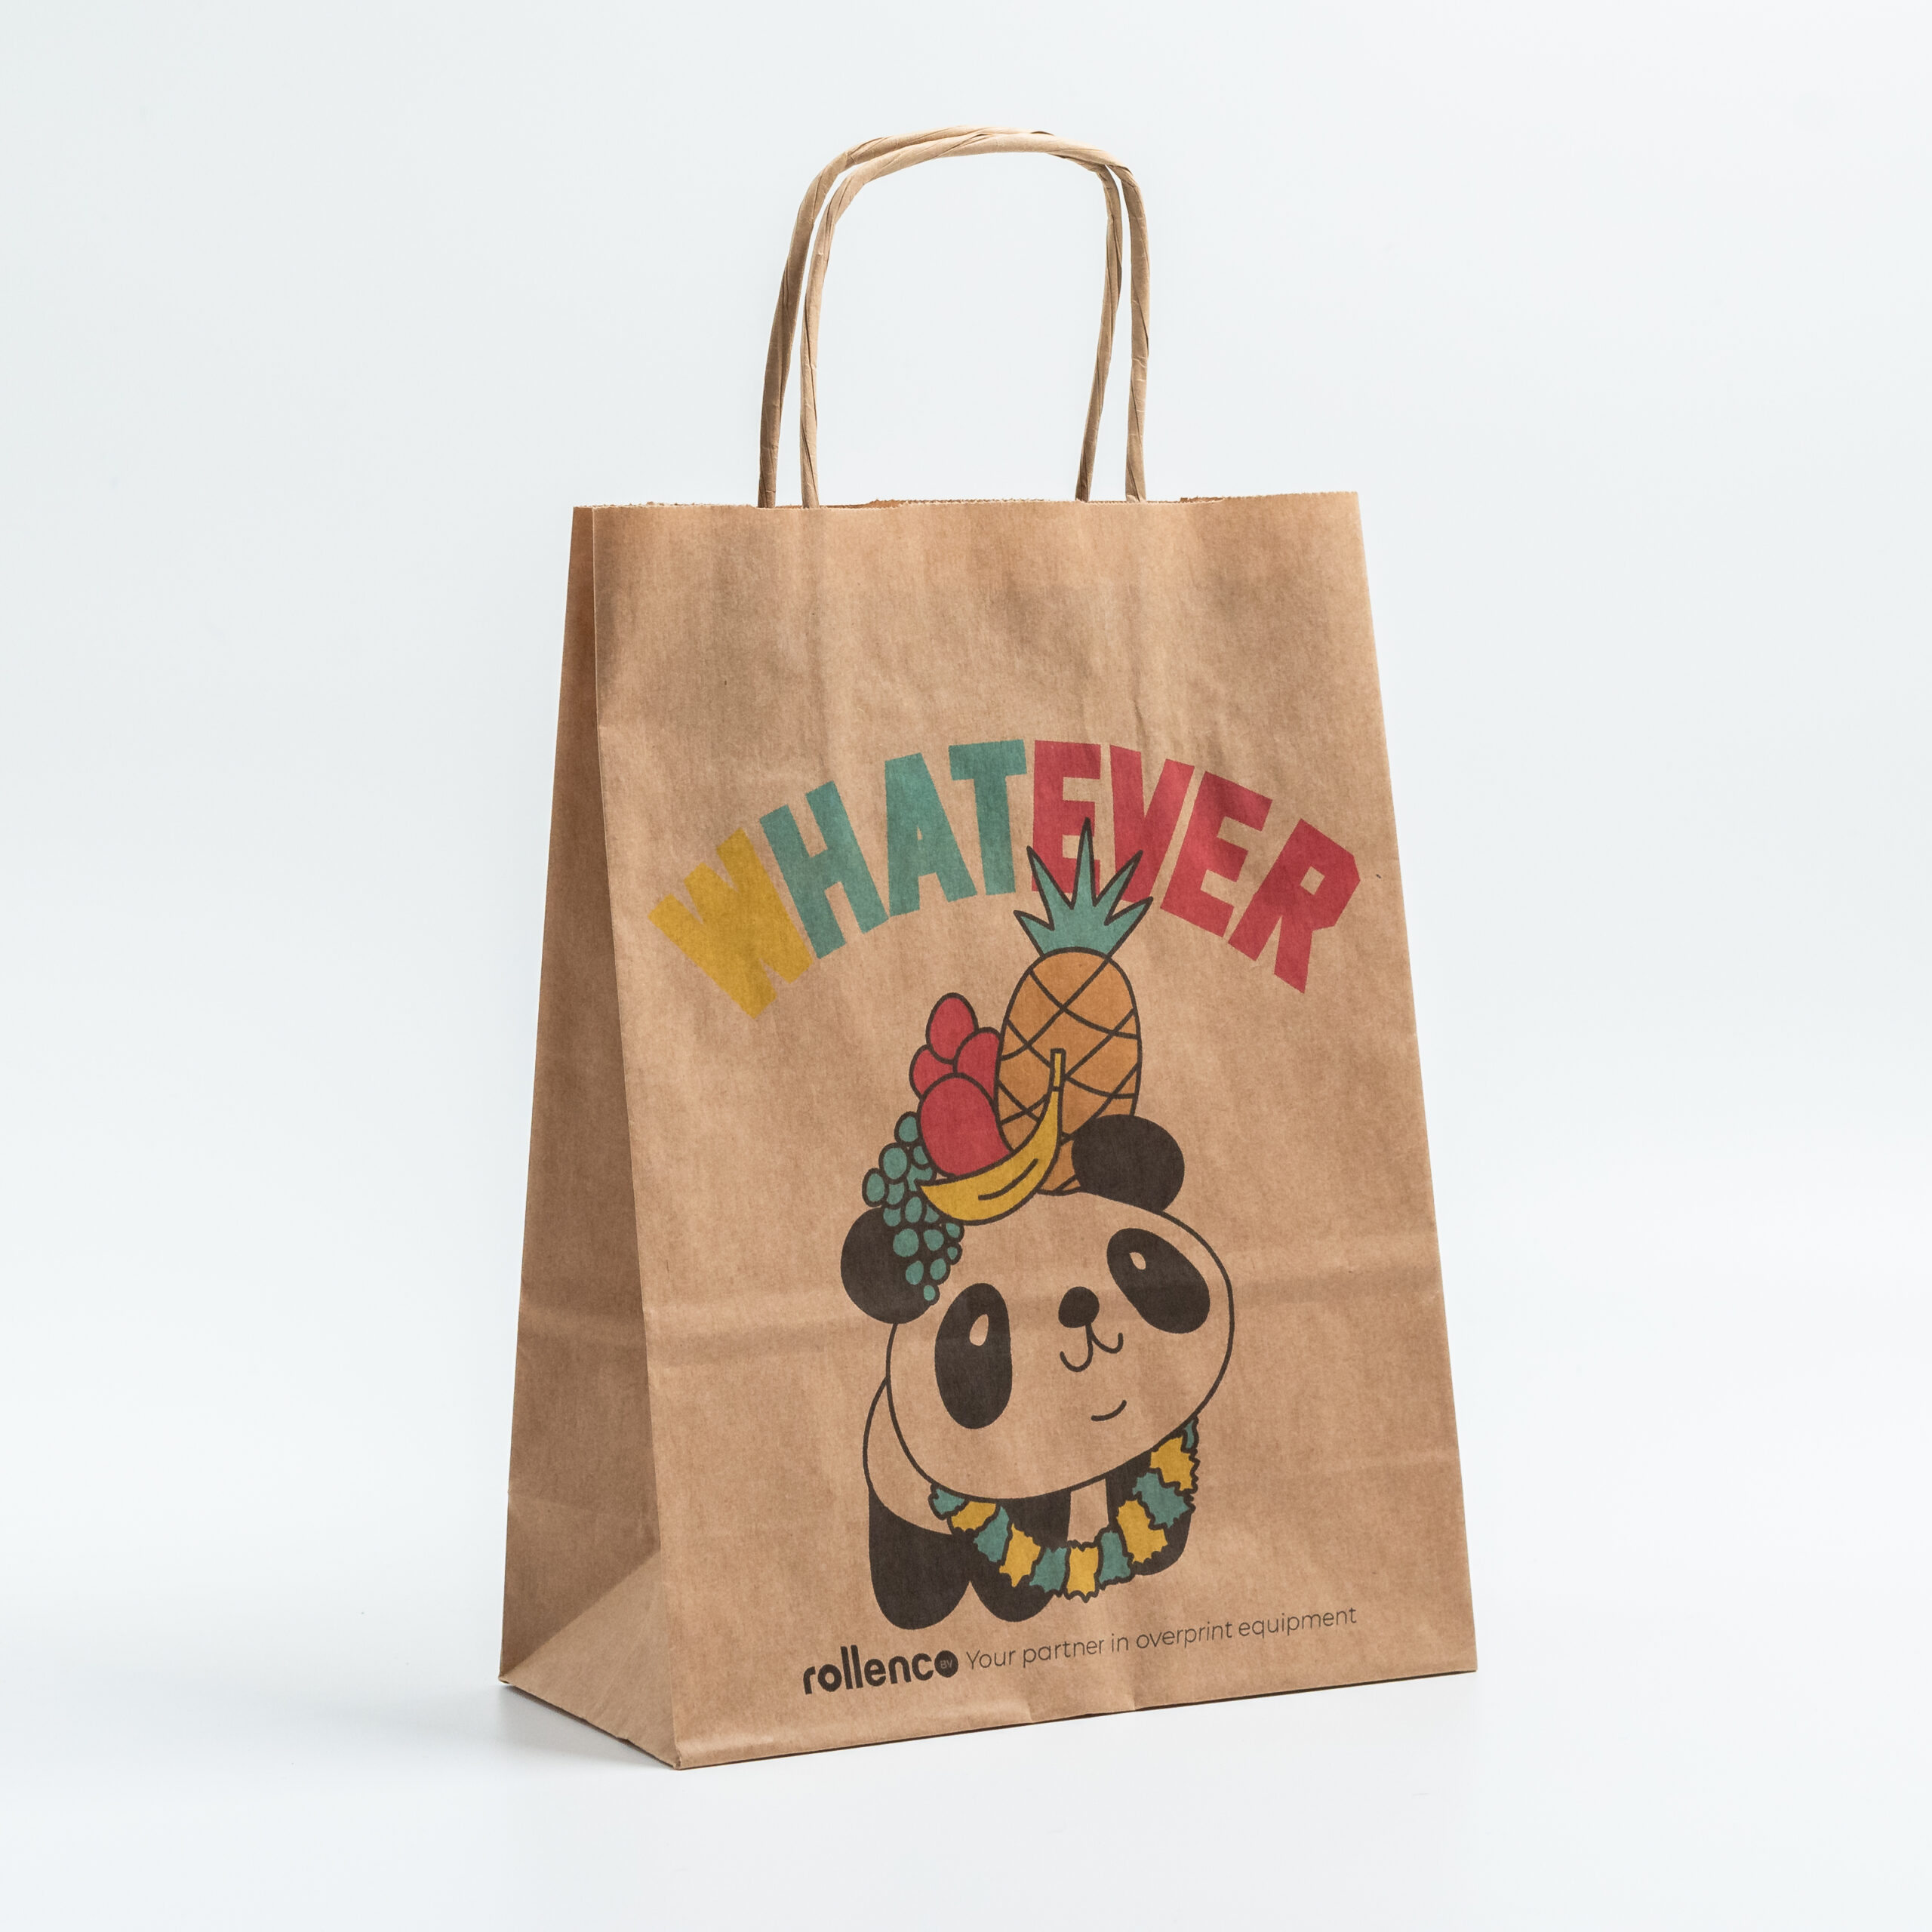 Buy Promotional Bag  Canvas Bag  Branded Bag  Stylish Bag  Shopping Bag   Digital and Screen Printing  Bag Size 12 X 14 Canvas at Amazonin